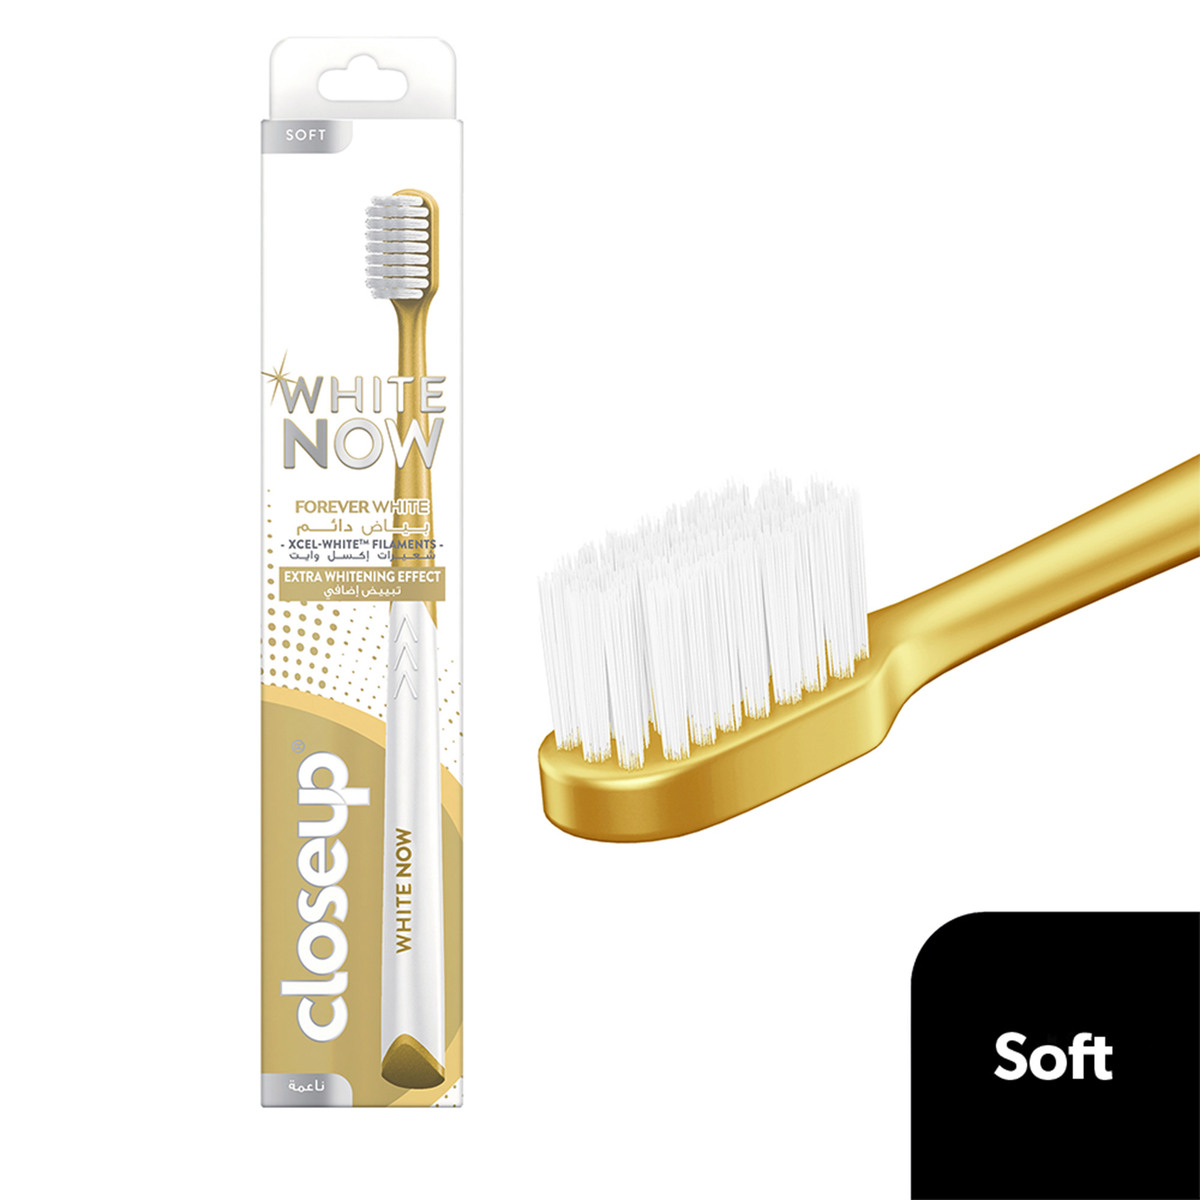 Closeup Toothbrush Extra Whitening Effect Soft 1 pc